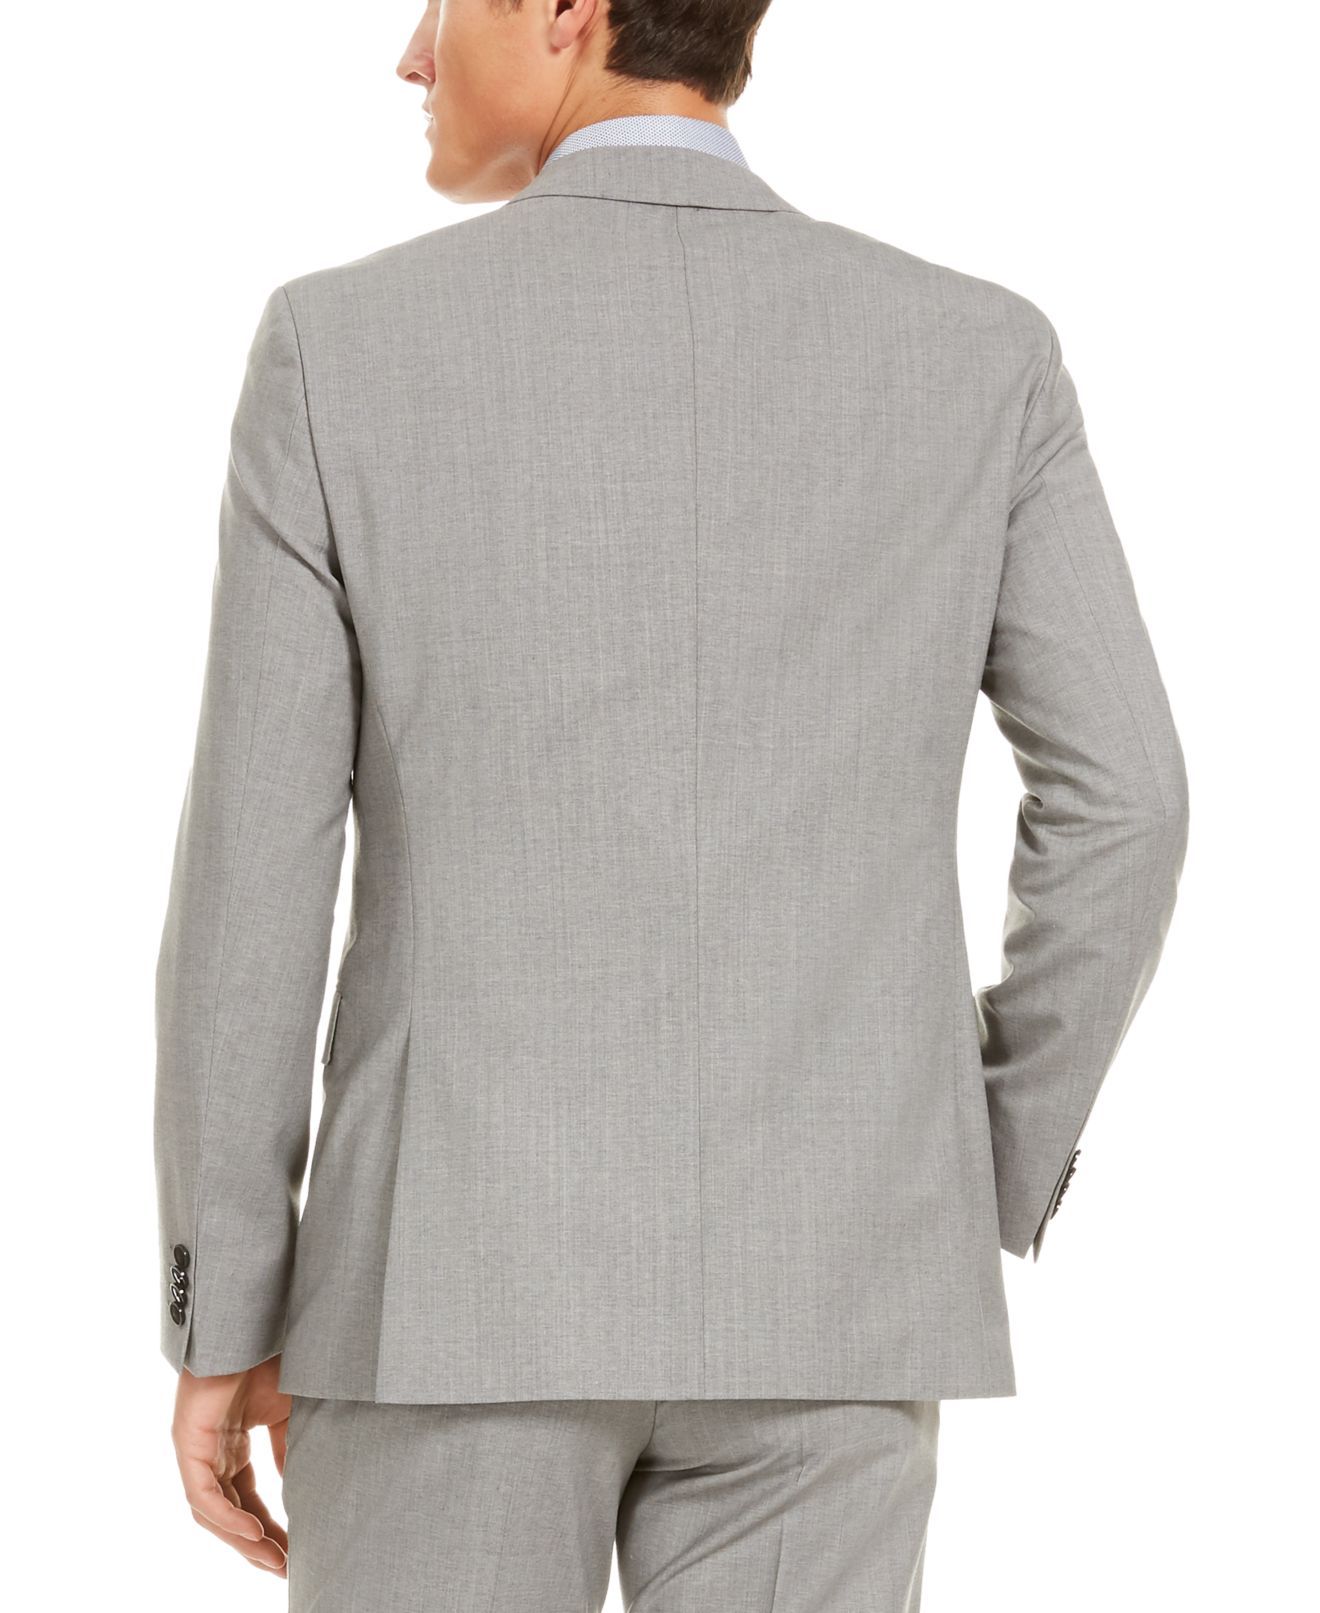 Color: Grays Size Type: Regular Type: Blazer Jacket Size: 48 Jacket Length: Regular Material: Wool Blends Pockets Top - Exterior: 3 Pockets Pockets Top - Interior: 2 Pockets Pockets Bottom: None